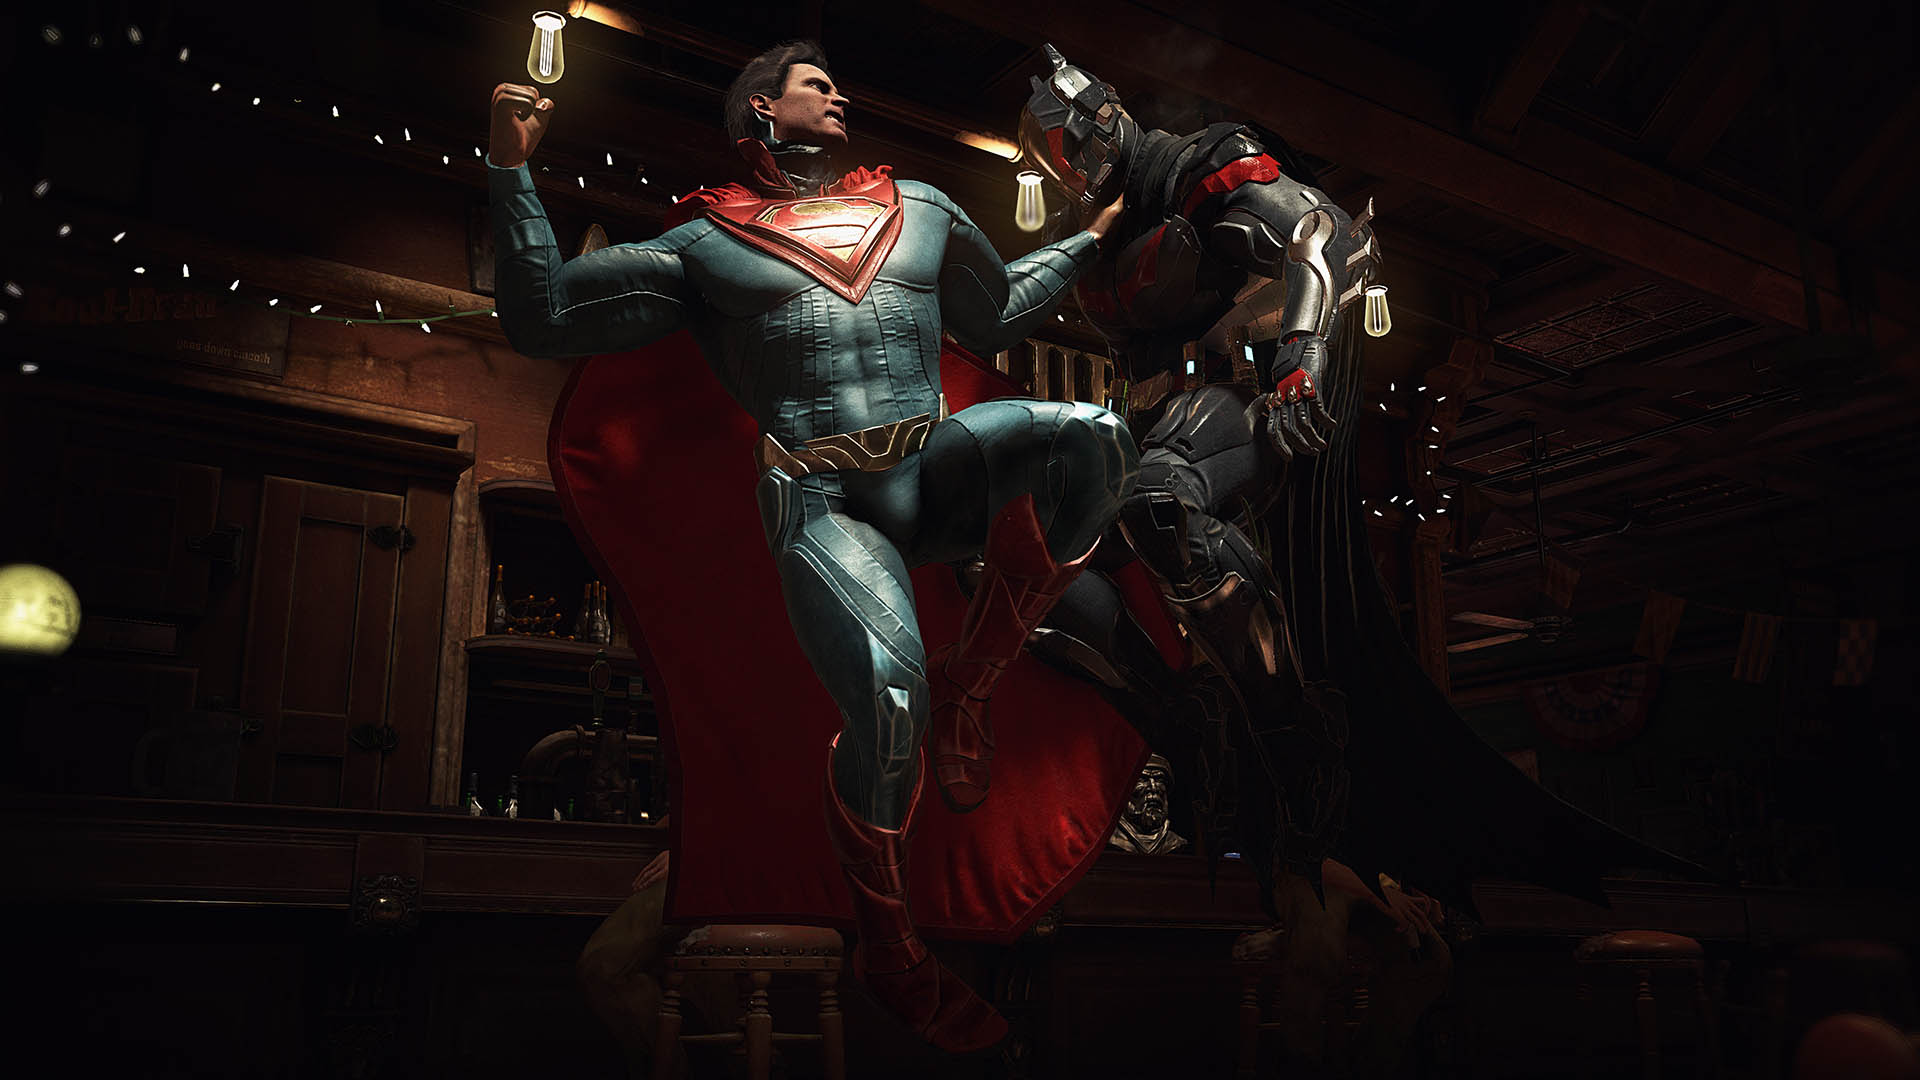 Injustice 2 Superman